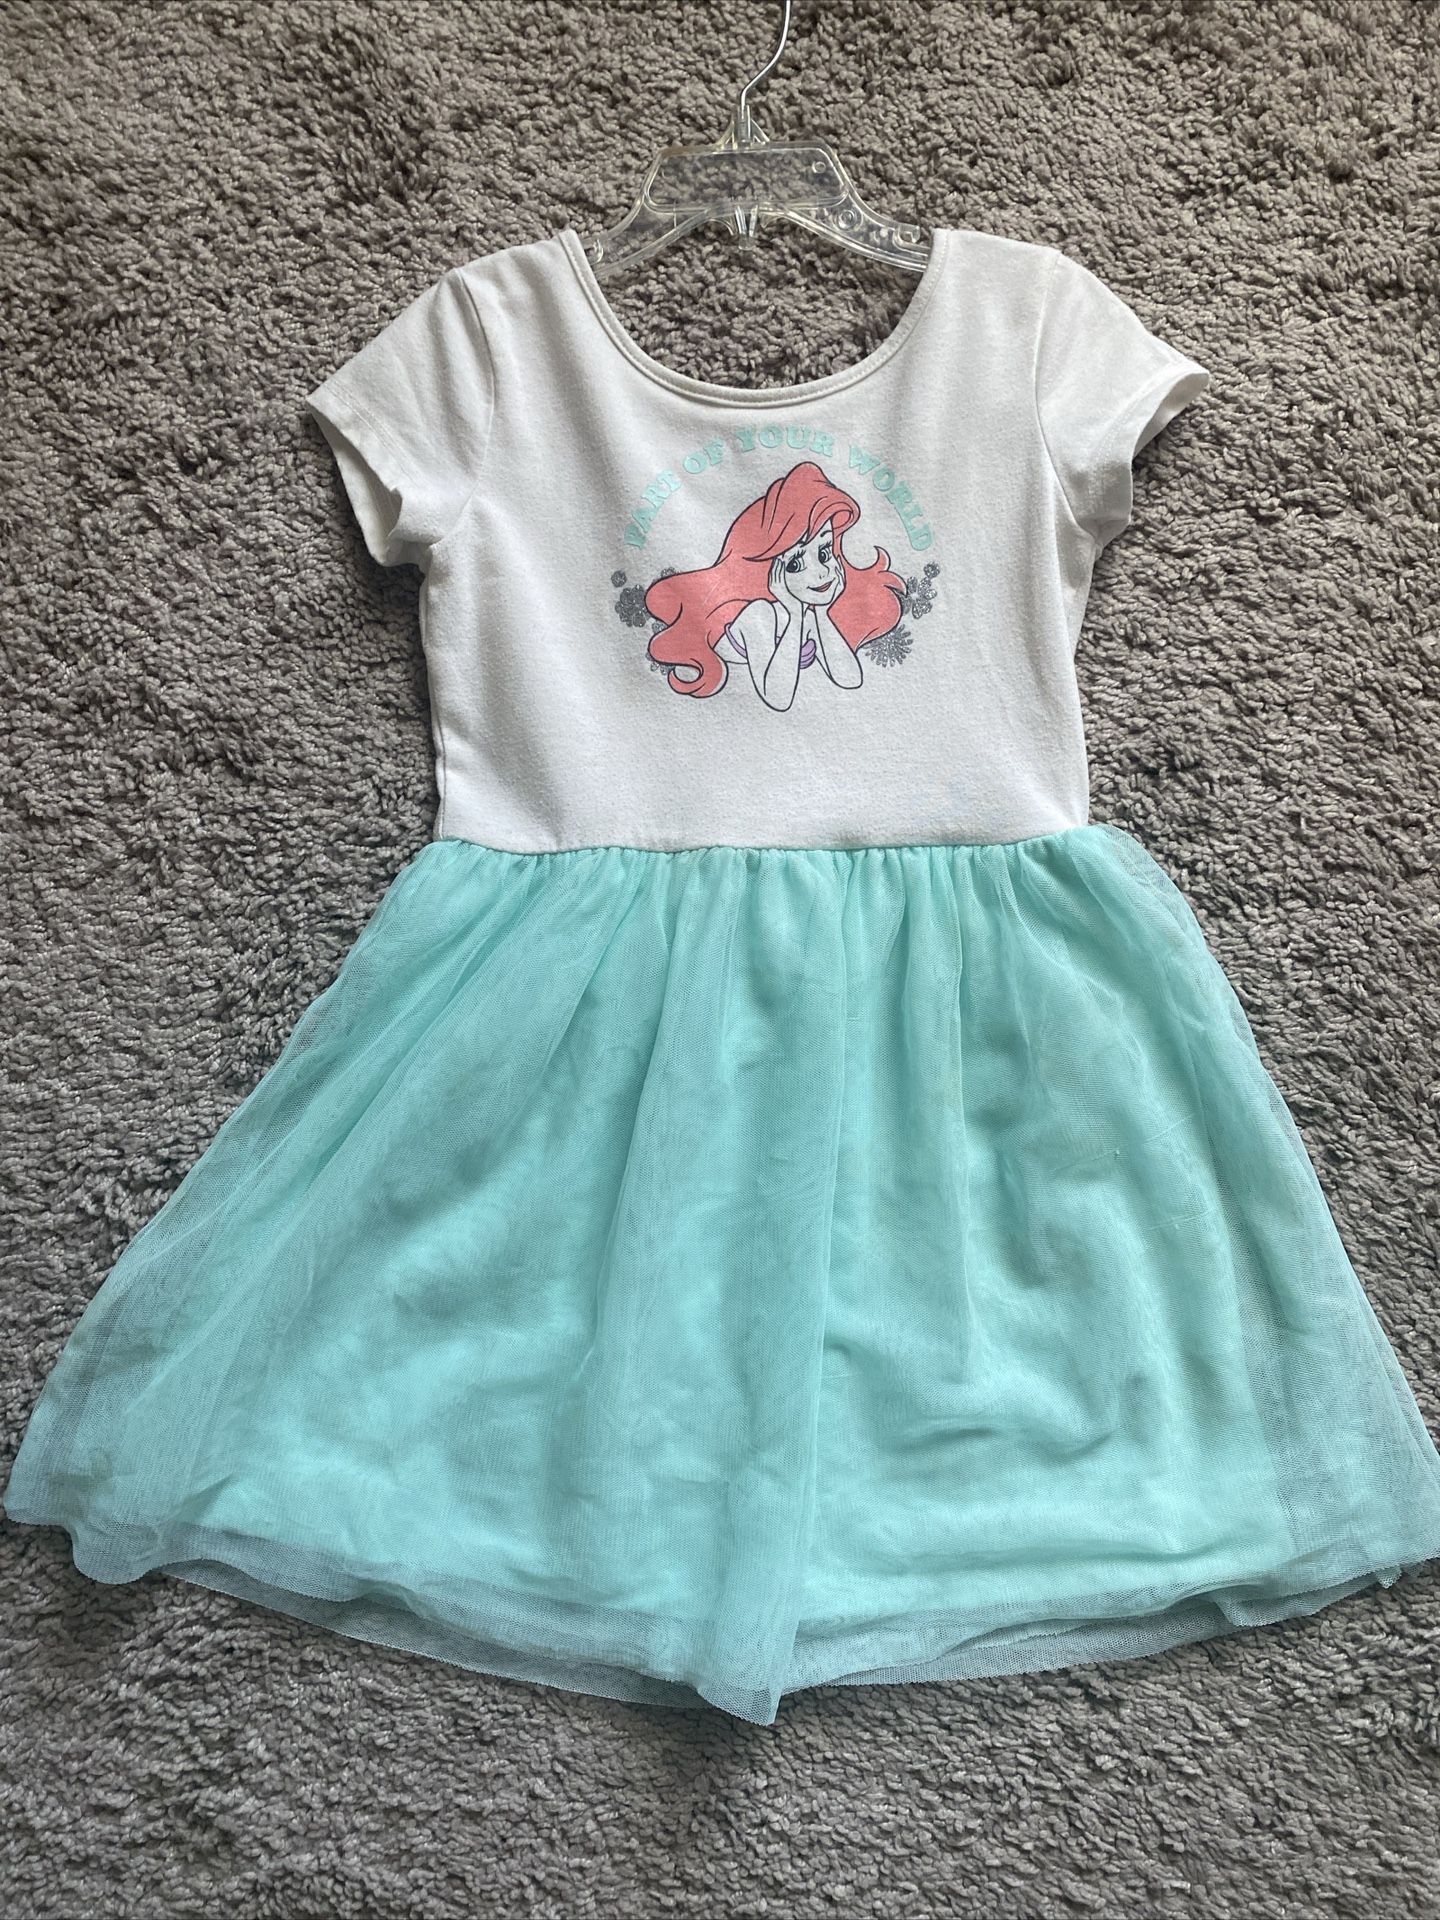 Disney Ariel Little Mermaid  Tutu Dress Size 5T 